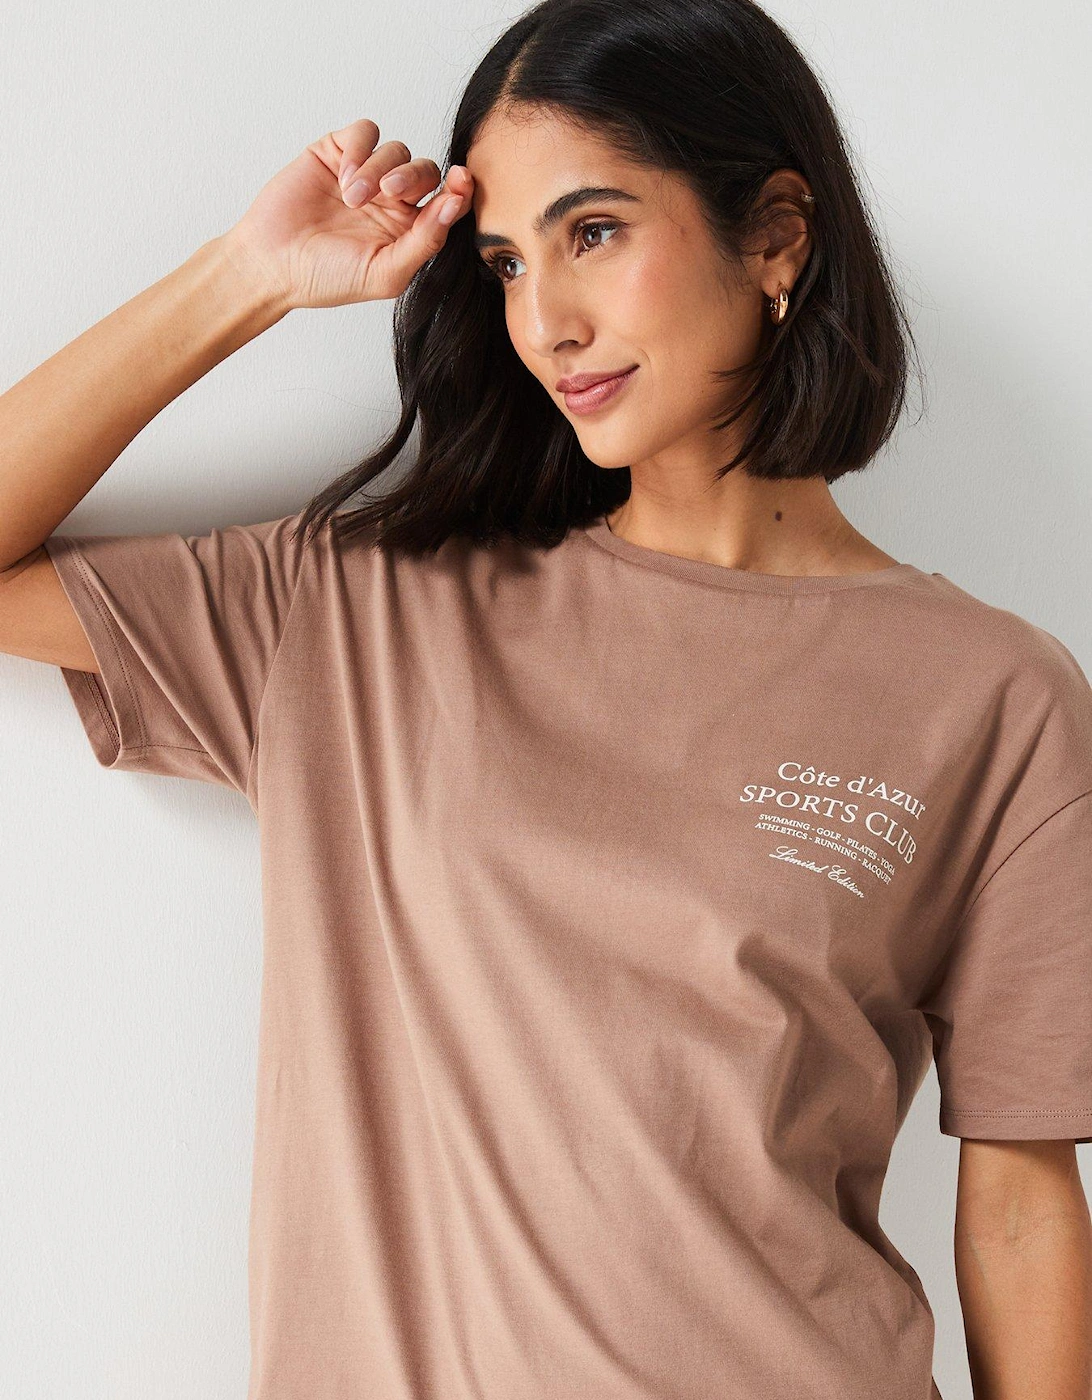 Graphic Tshirts - Light Brown